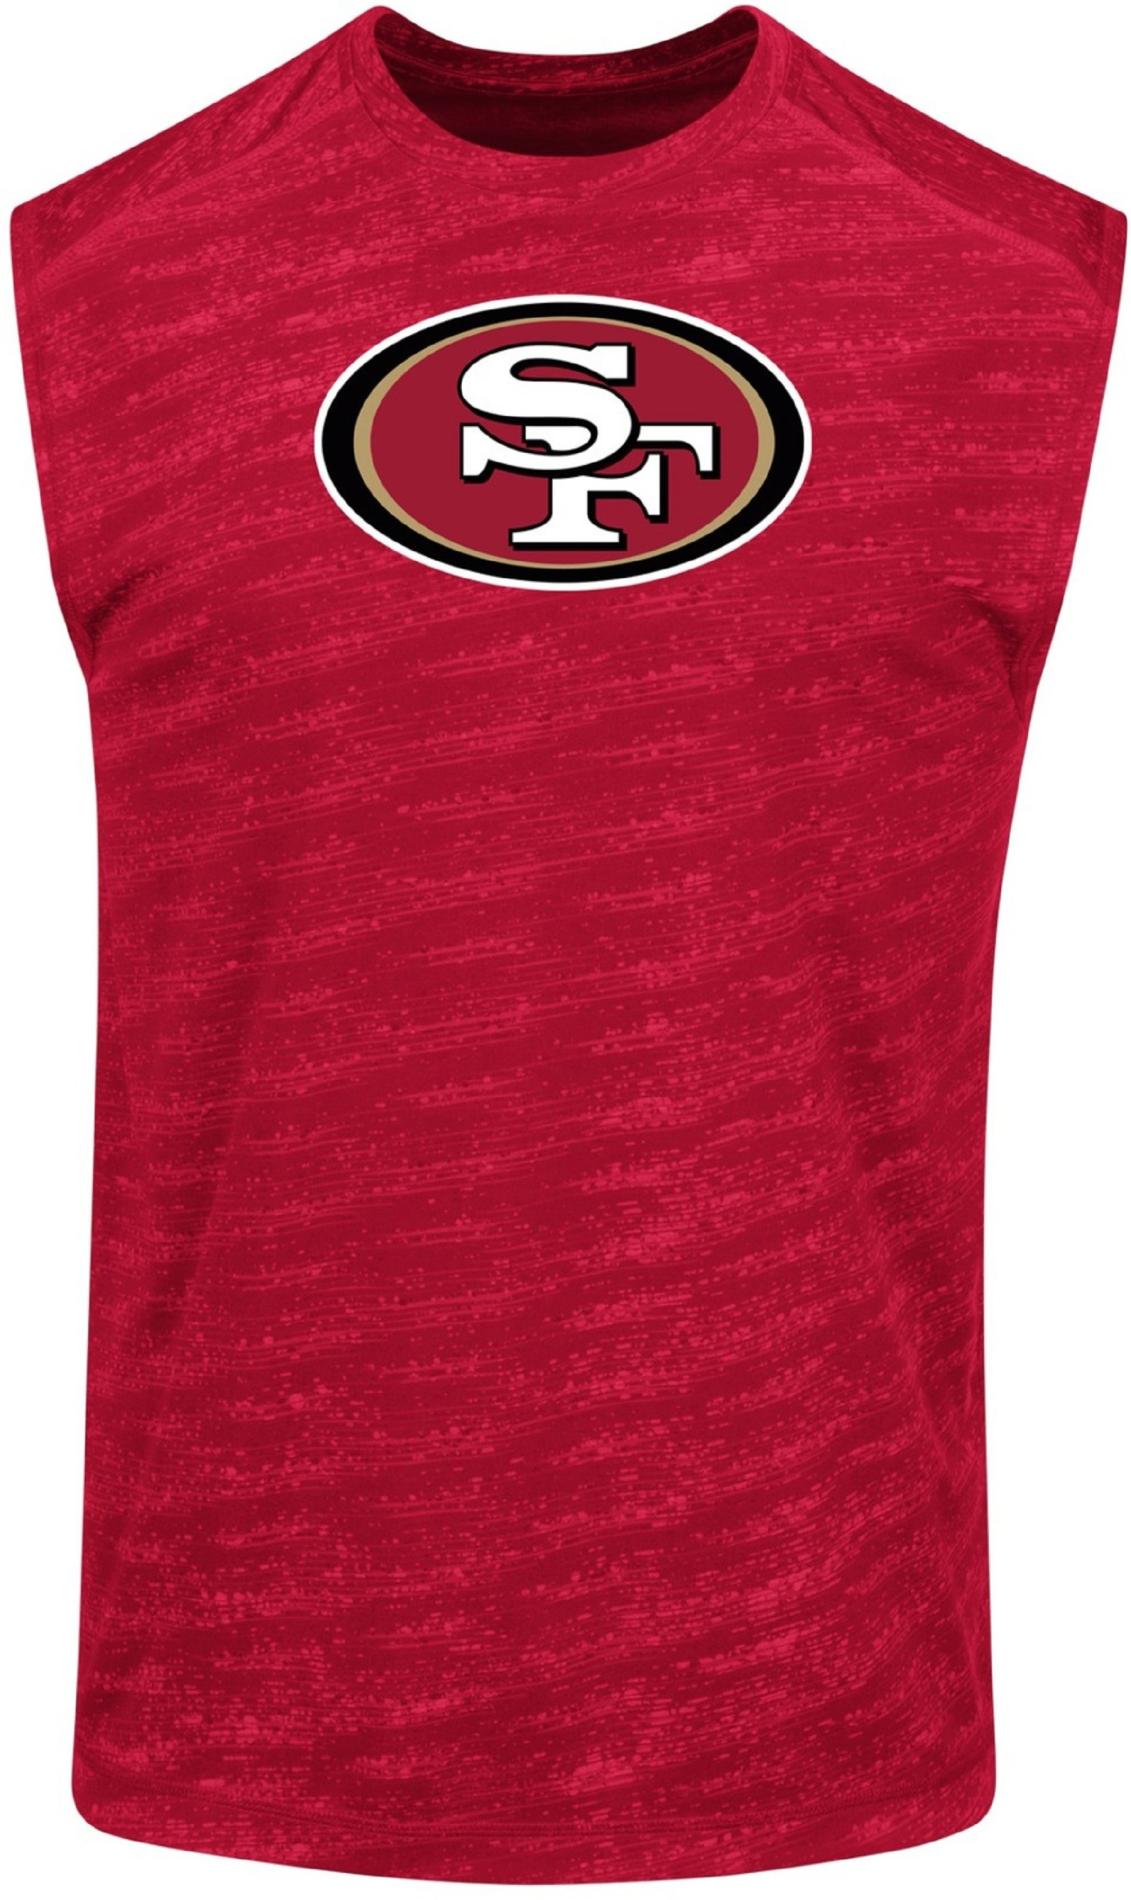 NFL Men's Muscle T-Shirt - San Francisco 49ers